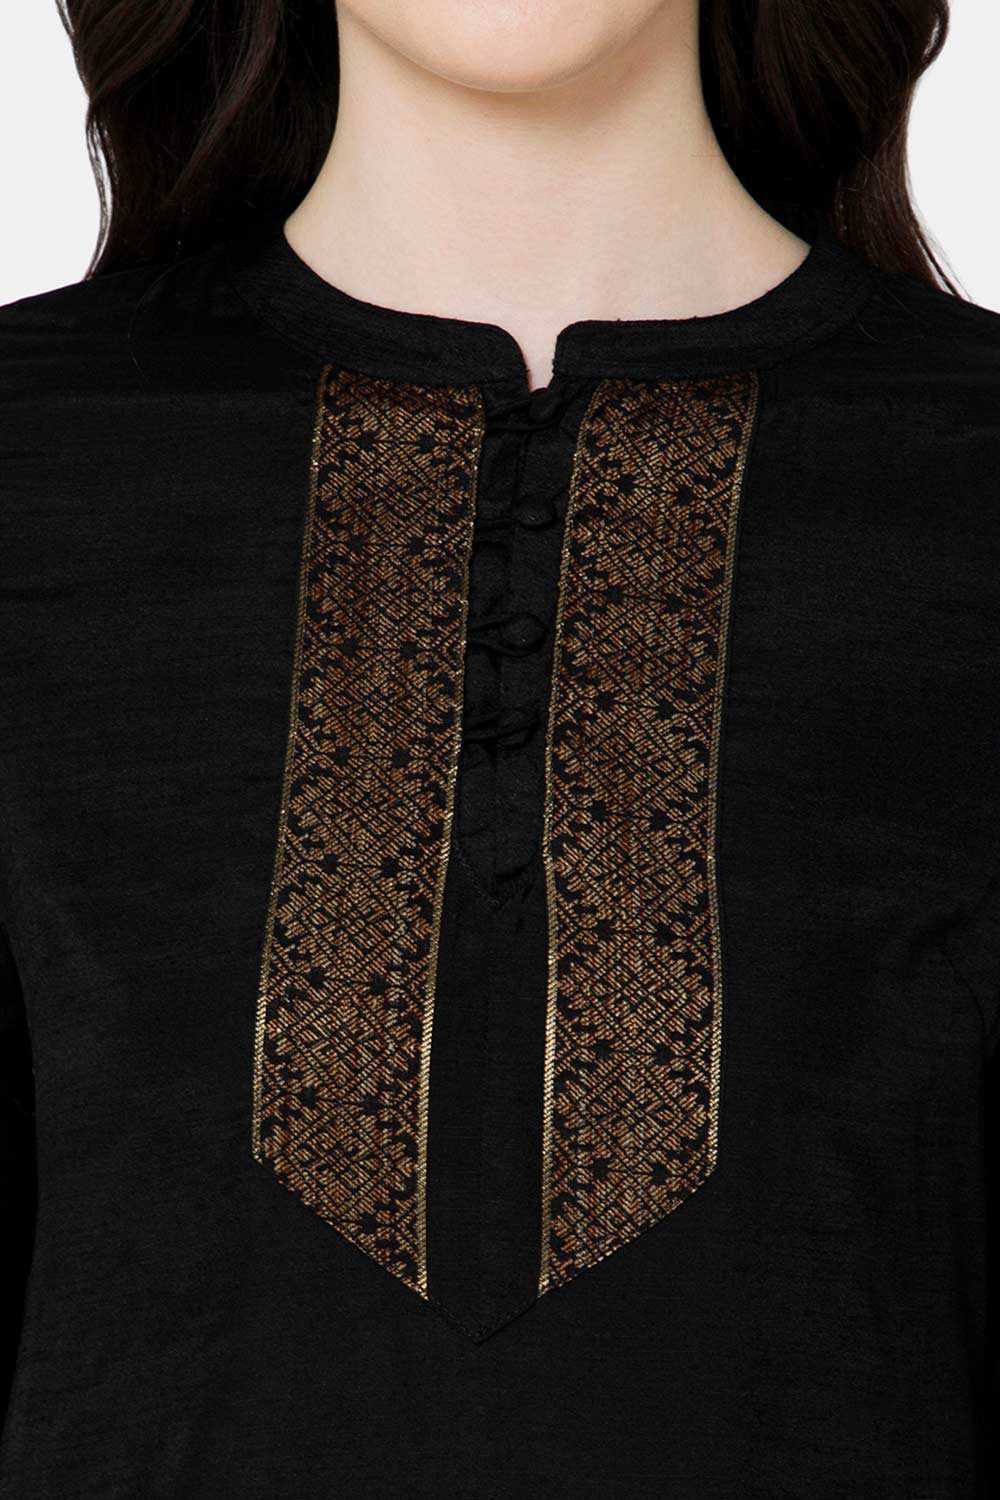 Mythri Women's Ethnic Wear Straight kurta - Black - KU53